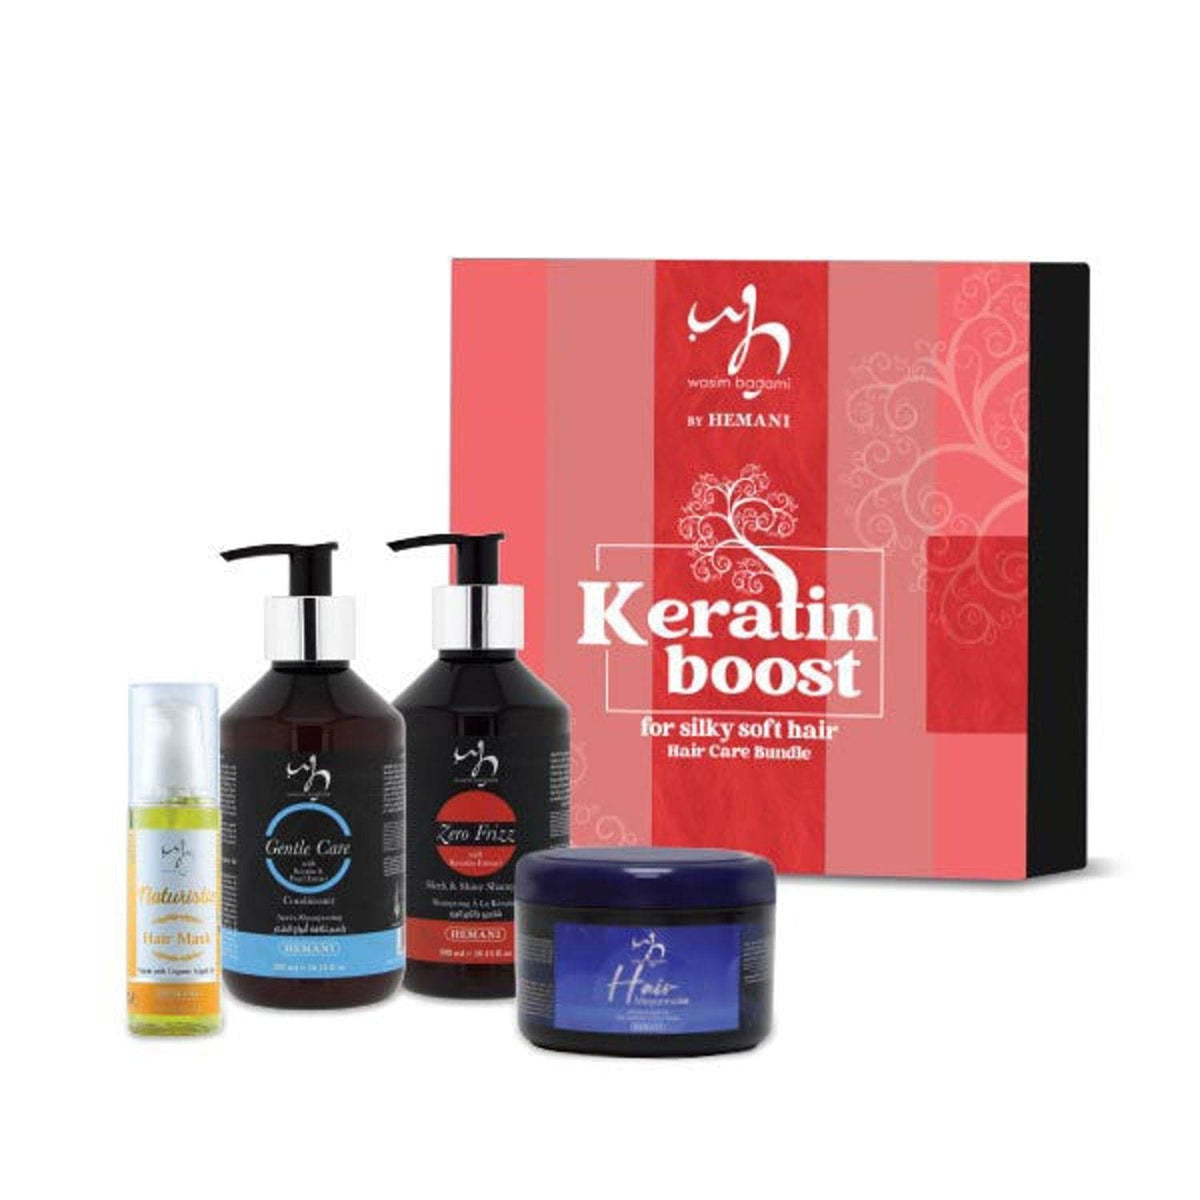 Hemani Keratin Boost Hair Care Set - Premium  from Hemani - Just Rs 3560.00! Shop now at Cozmetica